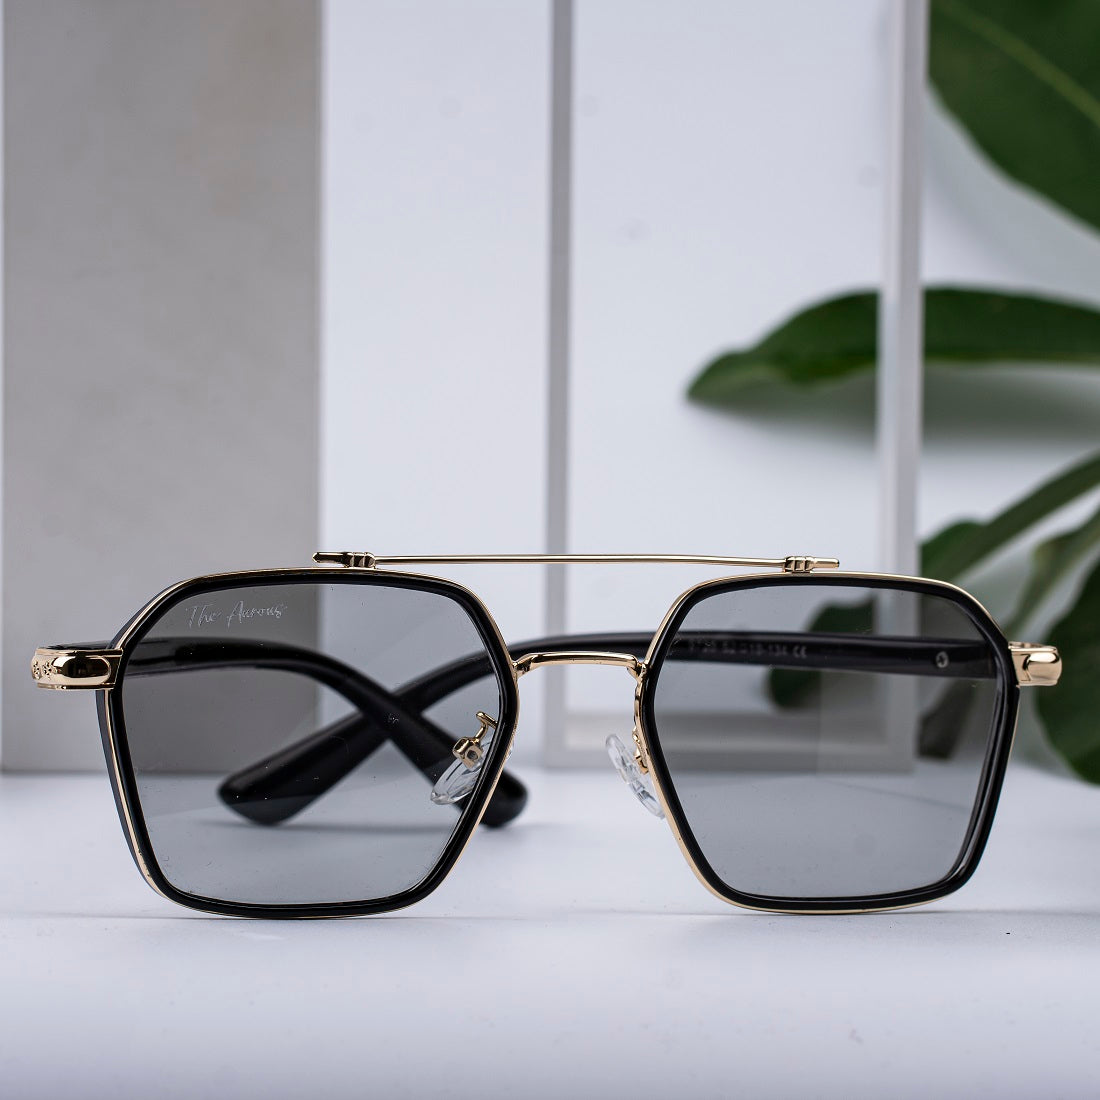 Photochromic Polarized Sunglasses from The Aurous